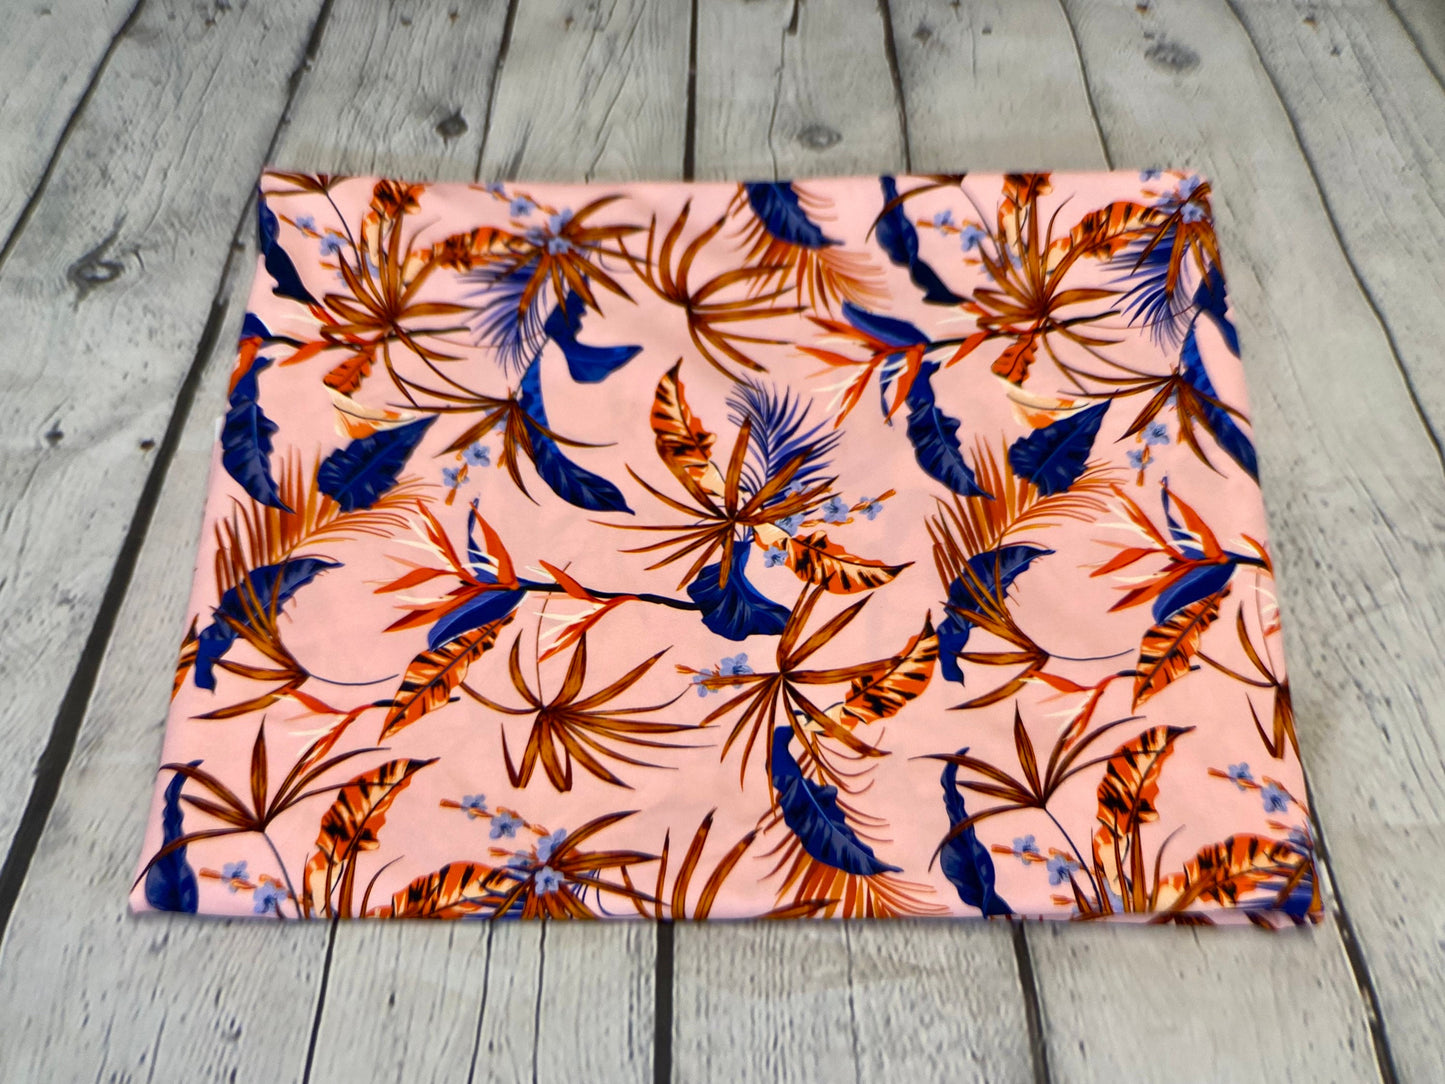 4 Way Stretch Assorted Print Nylon Spandex Fabric By The Yard Tricot Swim wear Bikini Active wear 260GSM Floral Tropical